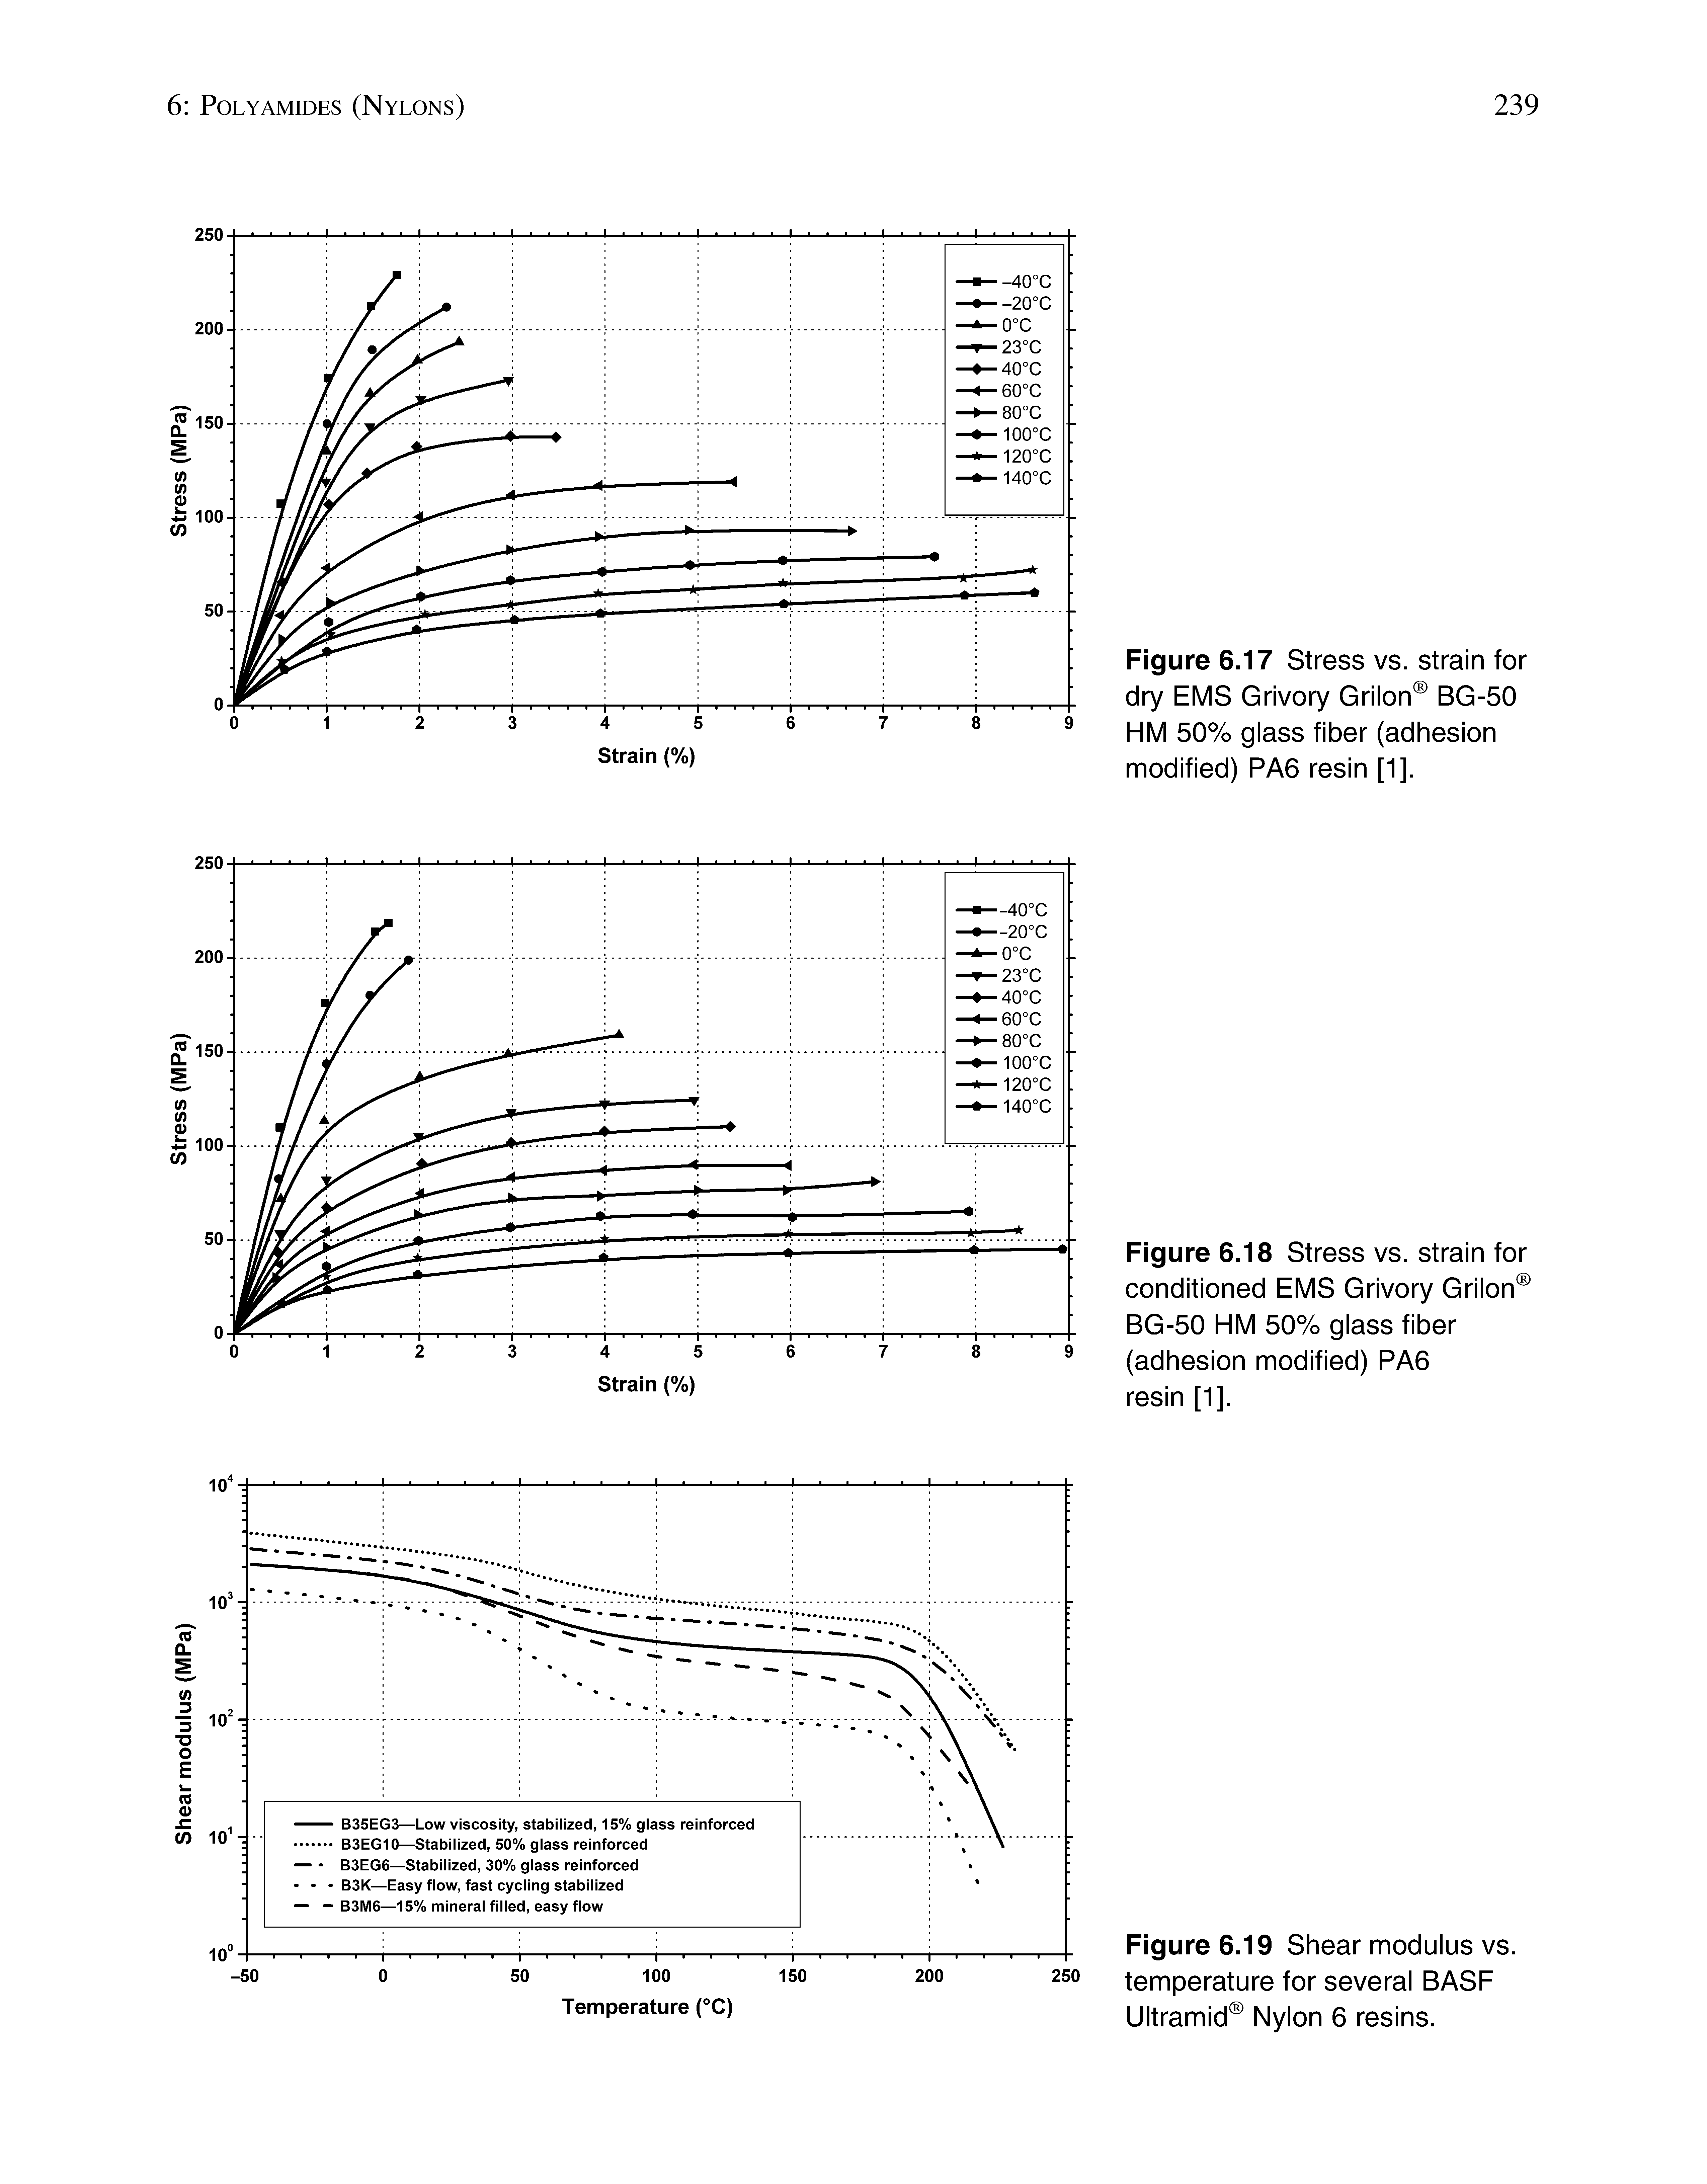 Figure 6.19 Shear modulus vs. temperature for several BASF Ultramid Nylon 6 resins.